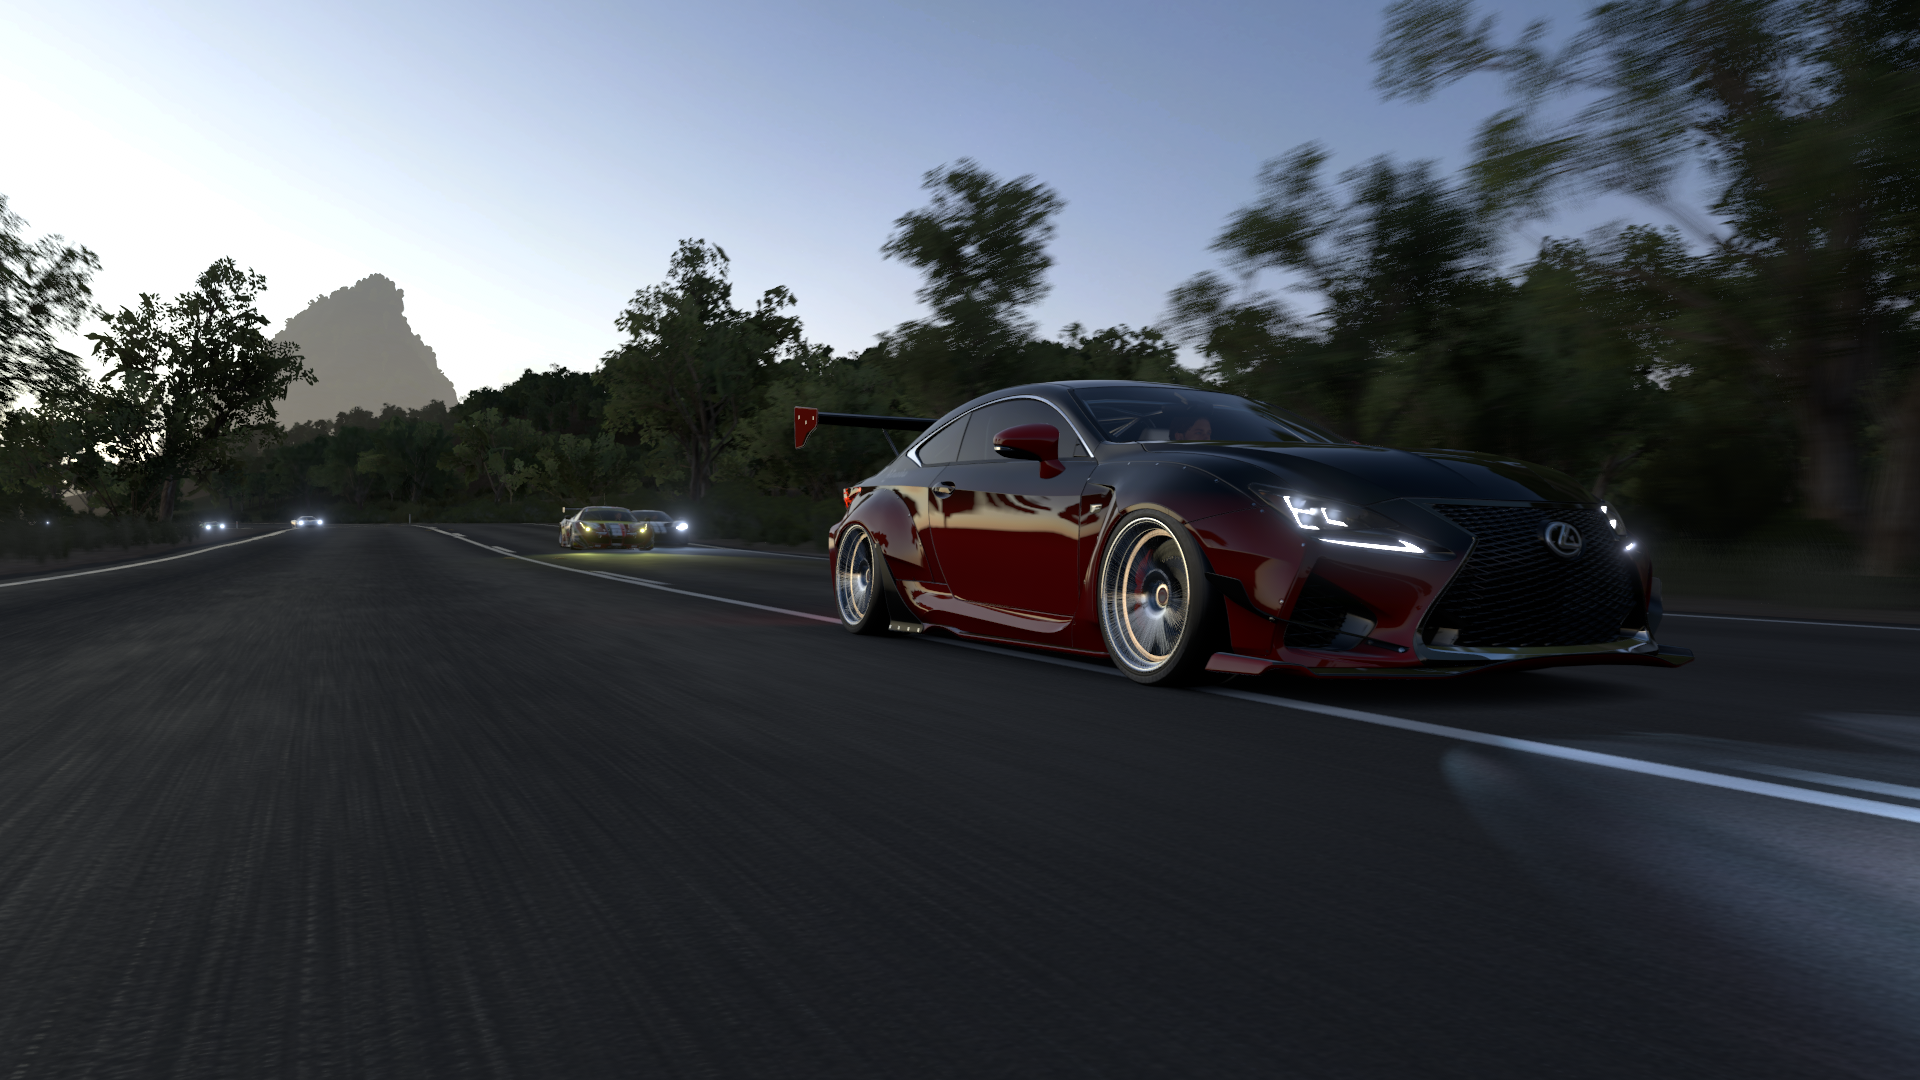 Wallpaper Lexus car in forza horizon 3 video game